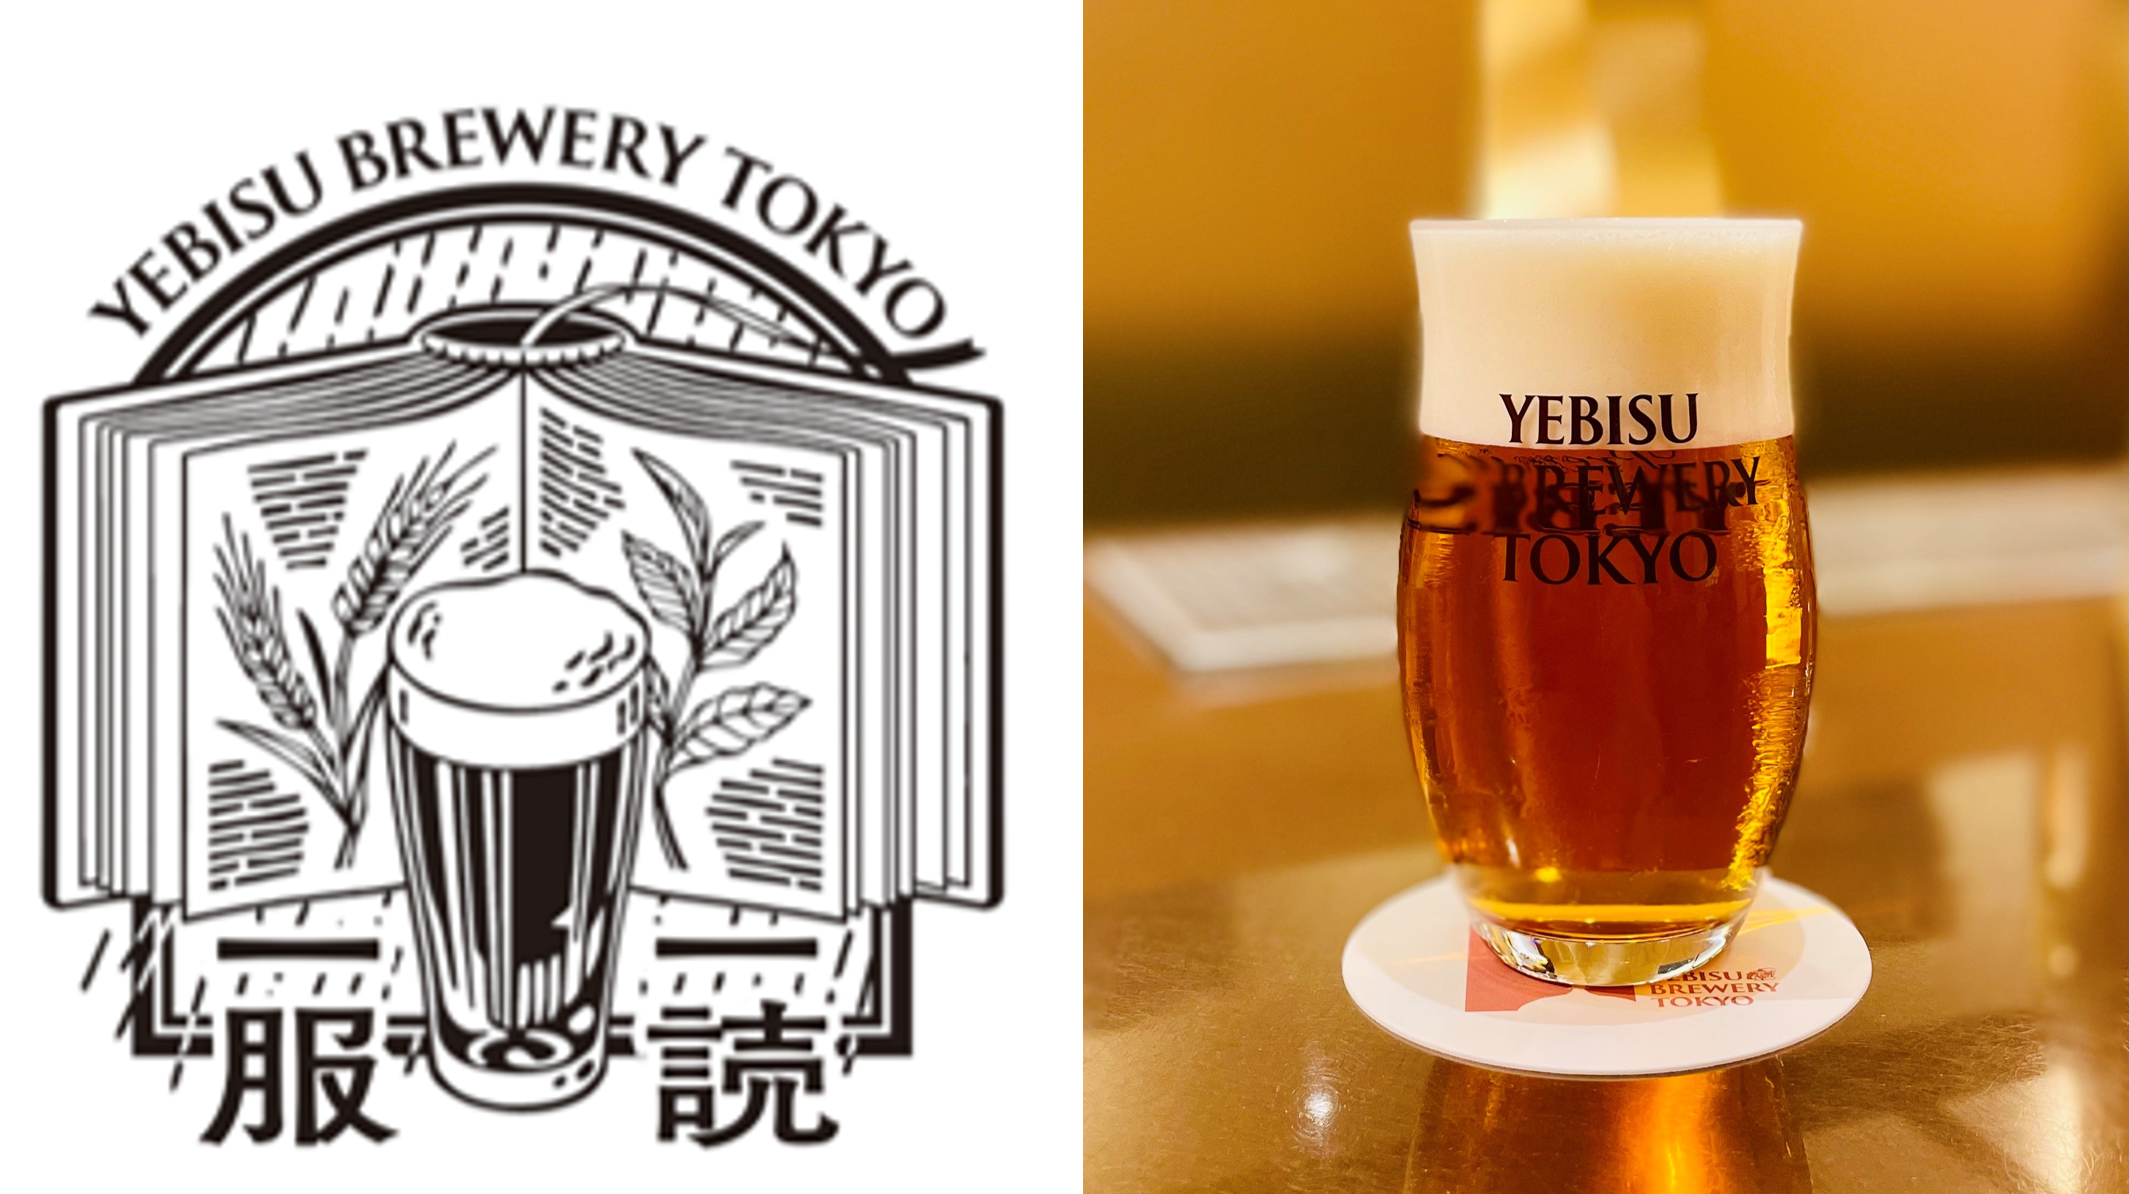 「YEBISU BREWERY TOKYO」でつくられた、ここでしか飲めない数量限定ビール「一読一服」6月12日発売のサブ画像1